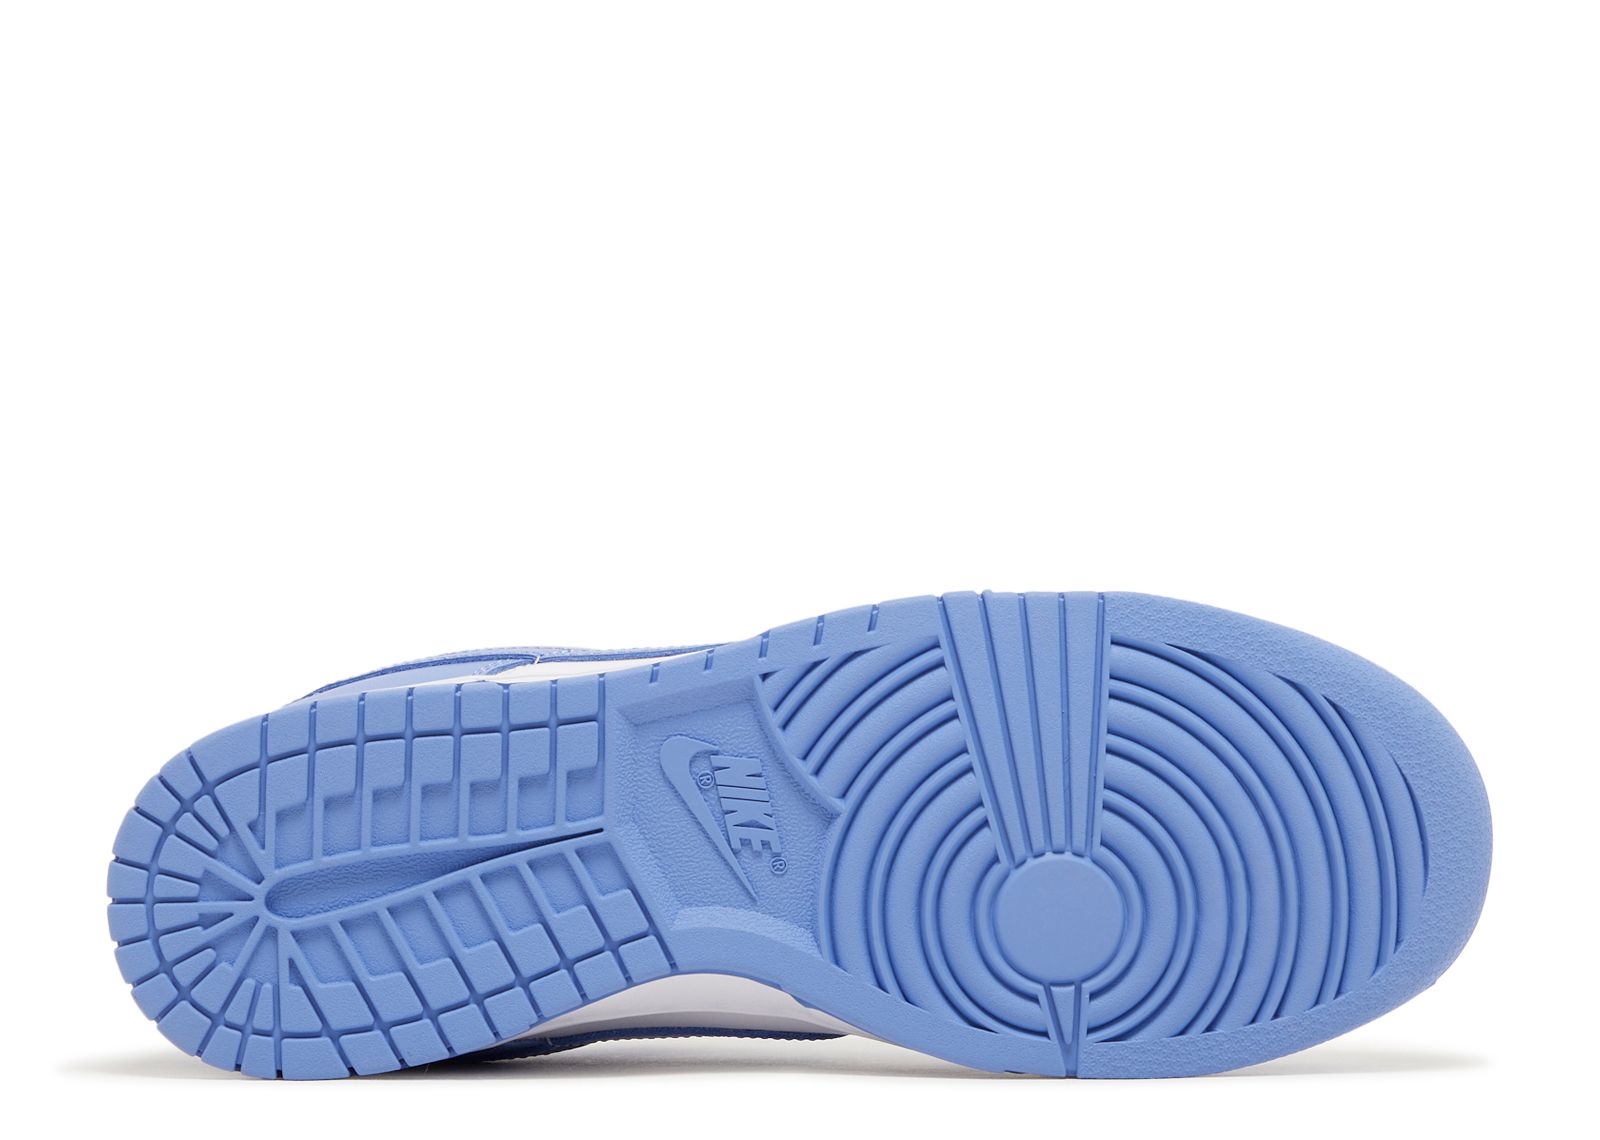 Dunk Low 'Polar Blue' - Nike - DV0833 400 - white/polar blue